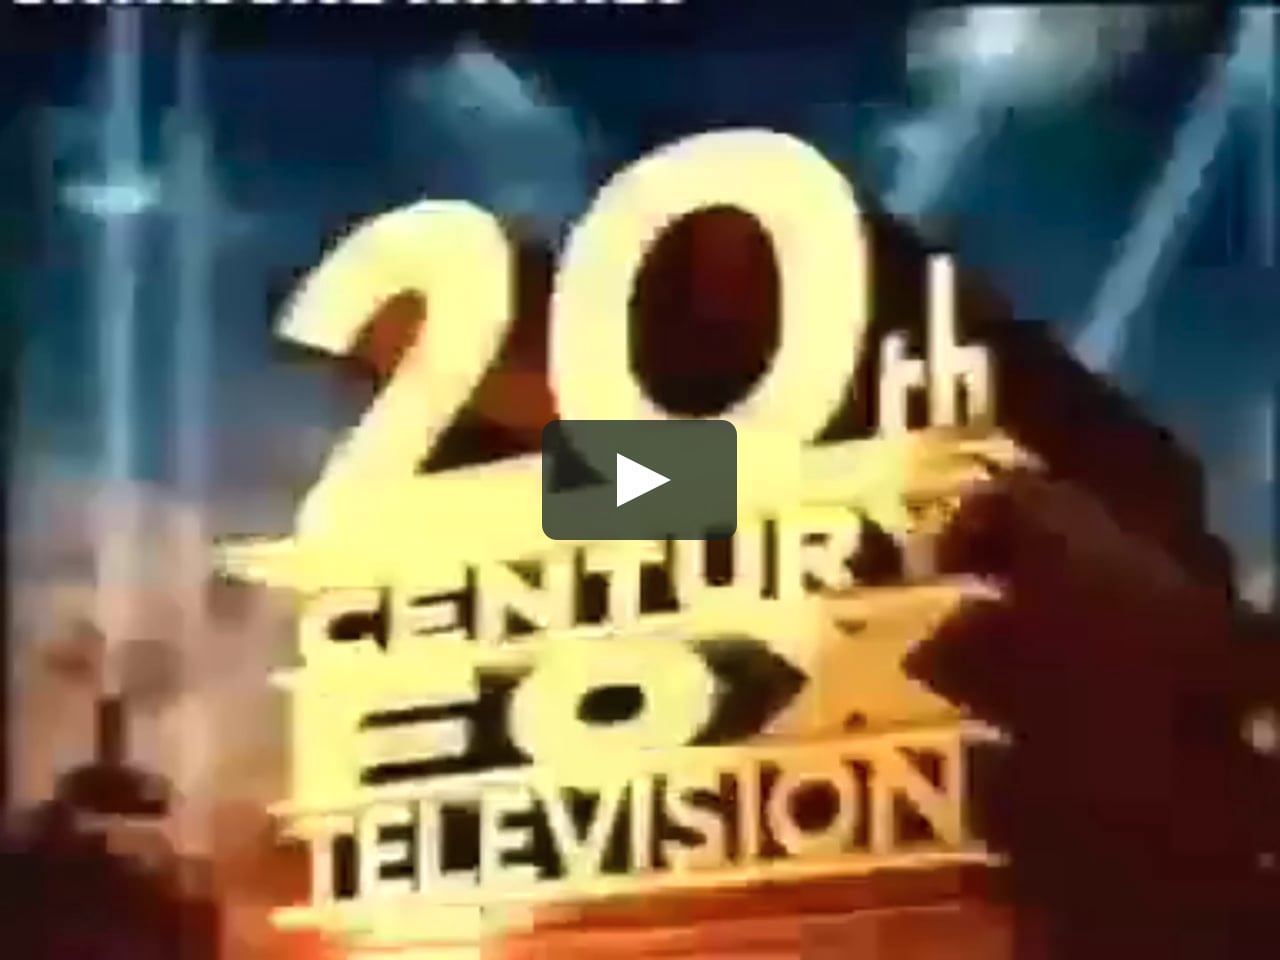 Steven Bochco Productions20th Century Fox Television 1999 On Vimeo